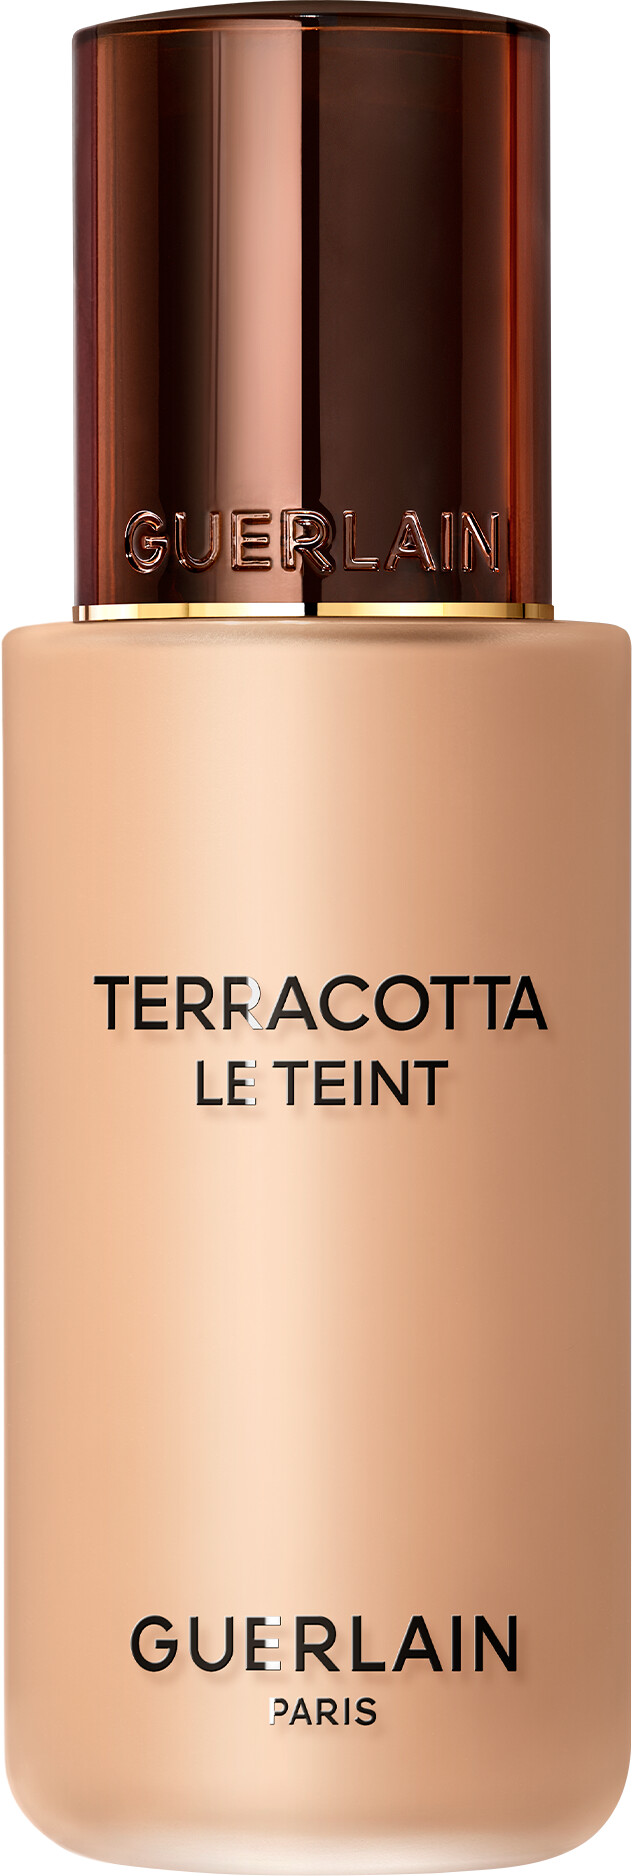 GUERLAIN Terracotta Le Teint Healthy Glow Foundation 35ml 3.5N - Neutral